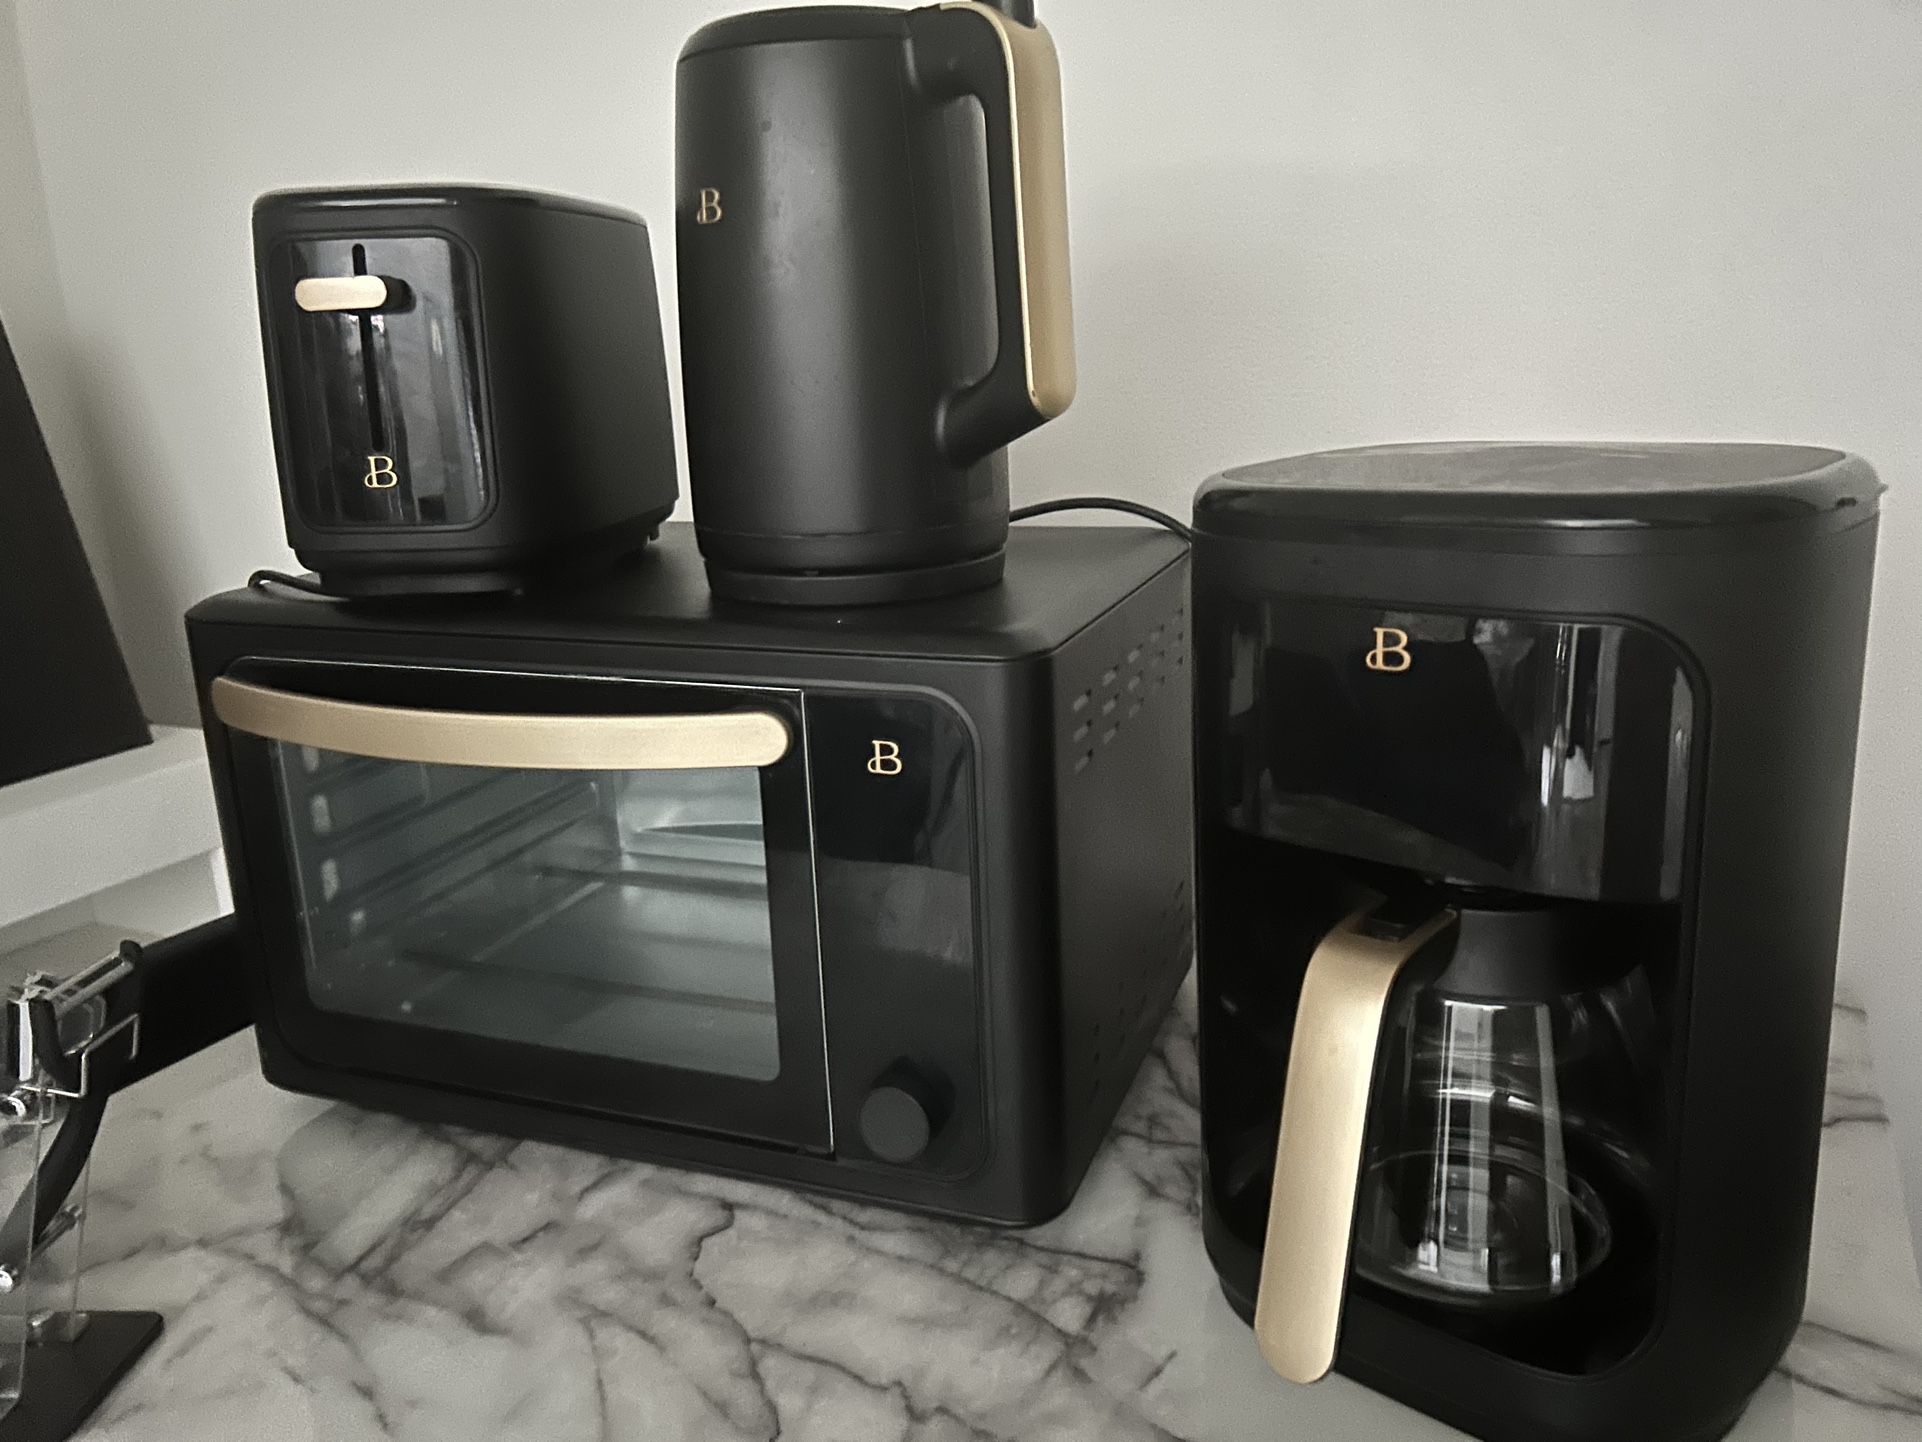 Appliances - (Drew Barrymore Brand)